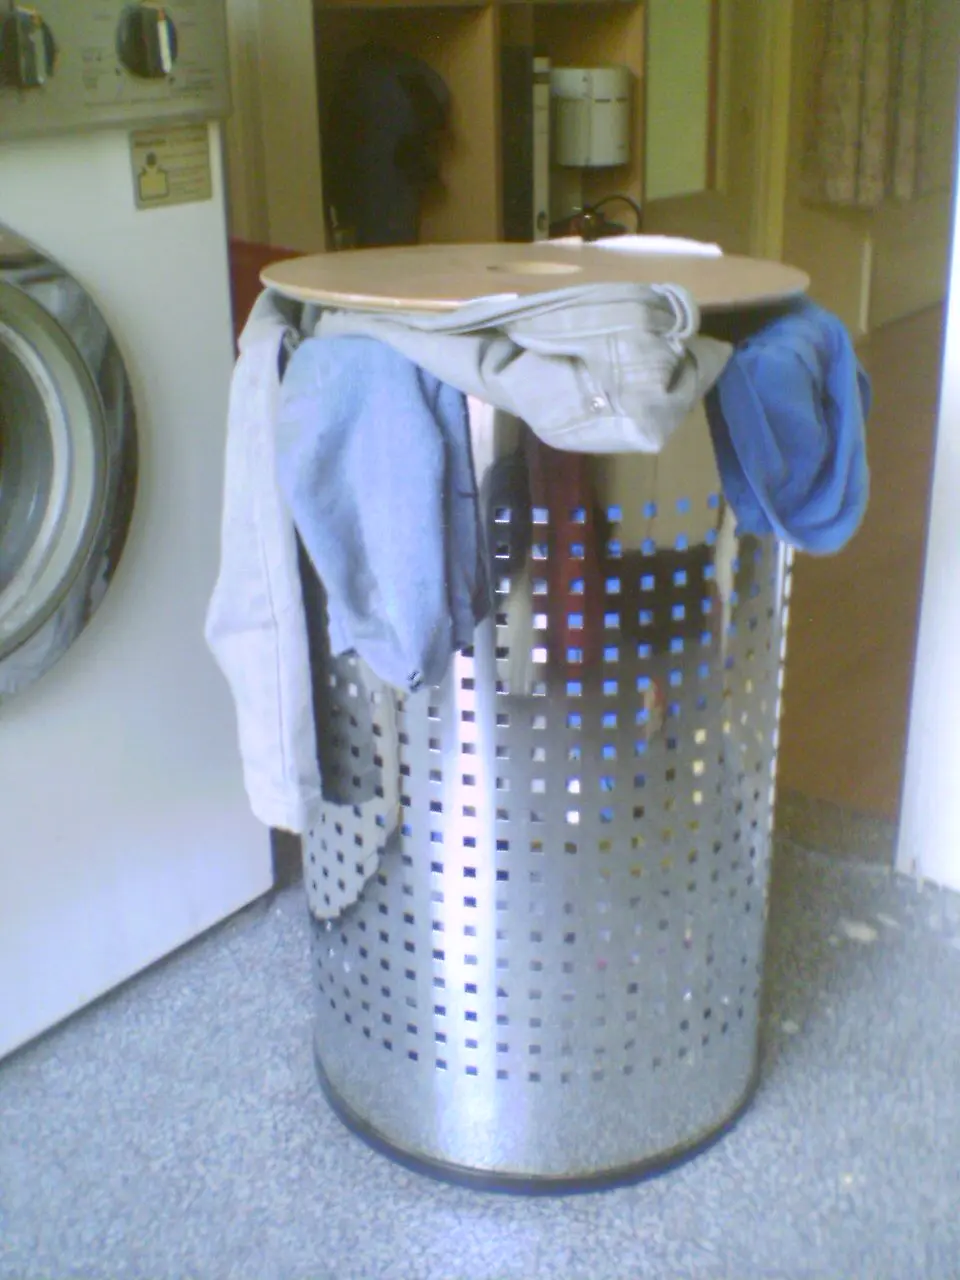 jugar a lavar ropa - Cómo se dice en inglés lavar ropa